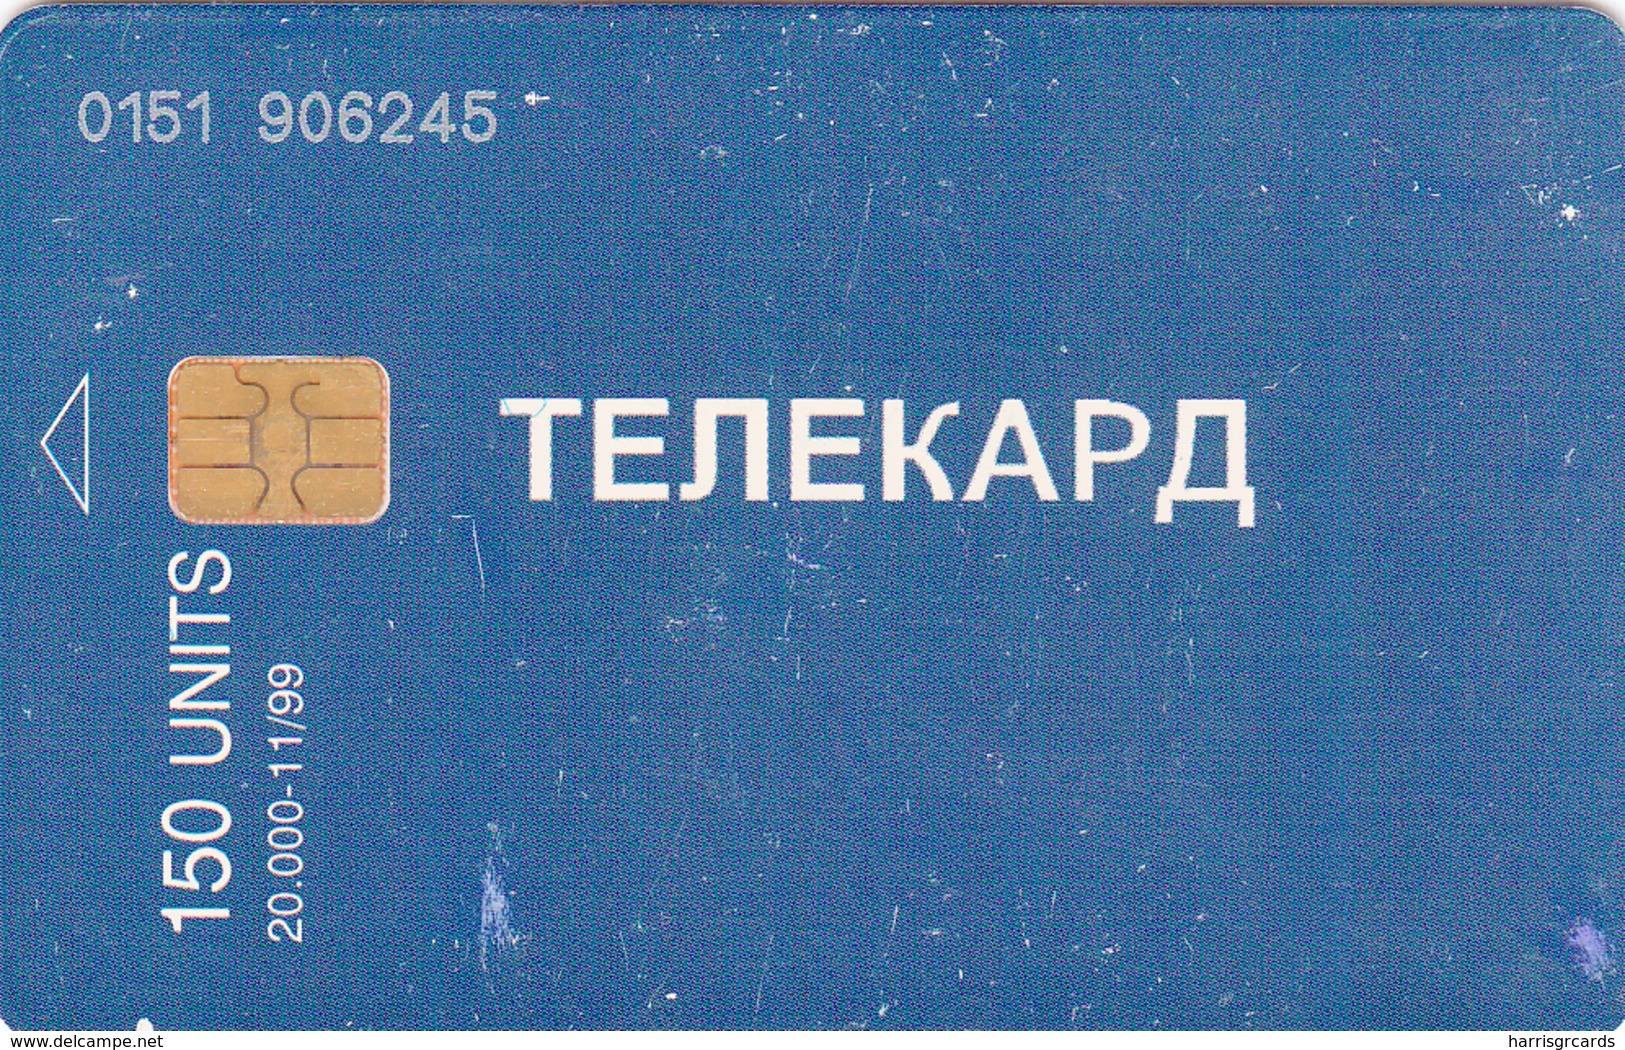 BOSNIA - Republica Srpska Telecard, Blue Card, 11/99, 150 U, Tirage 20,000, Used As Scan - Bosnien